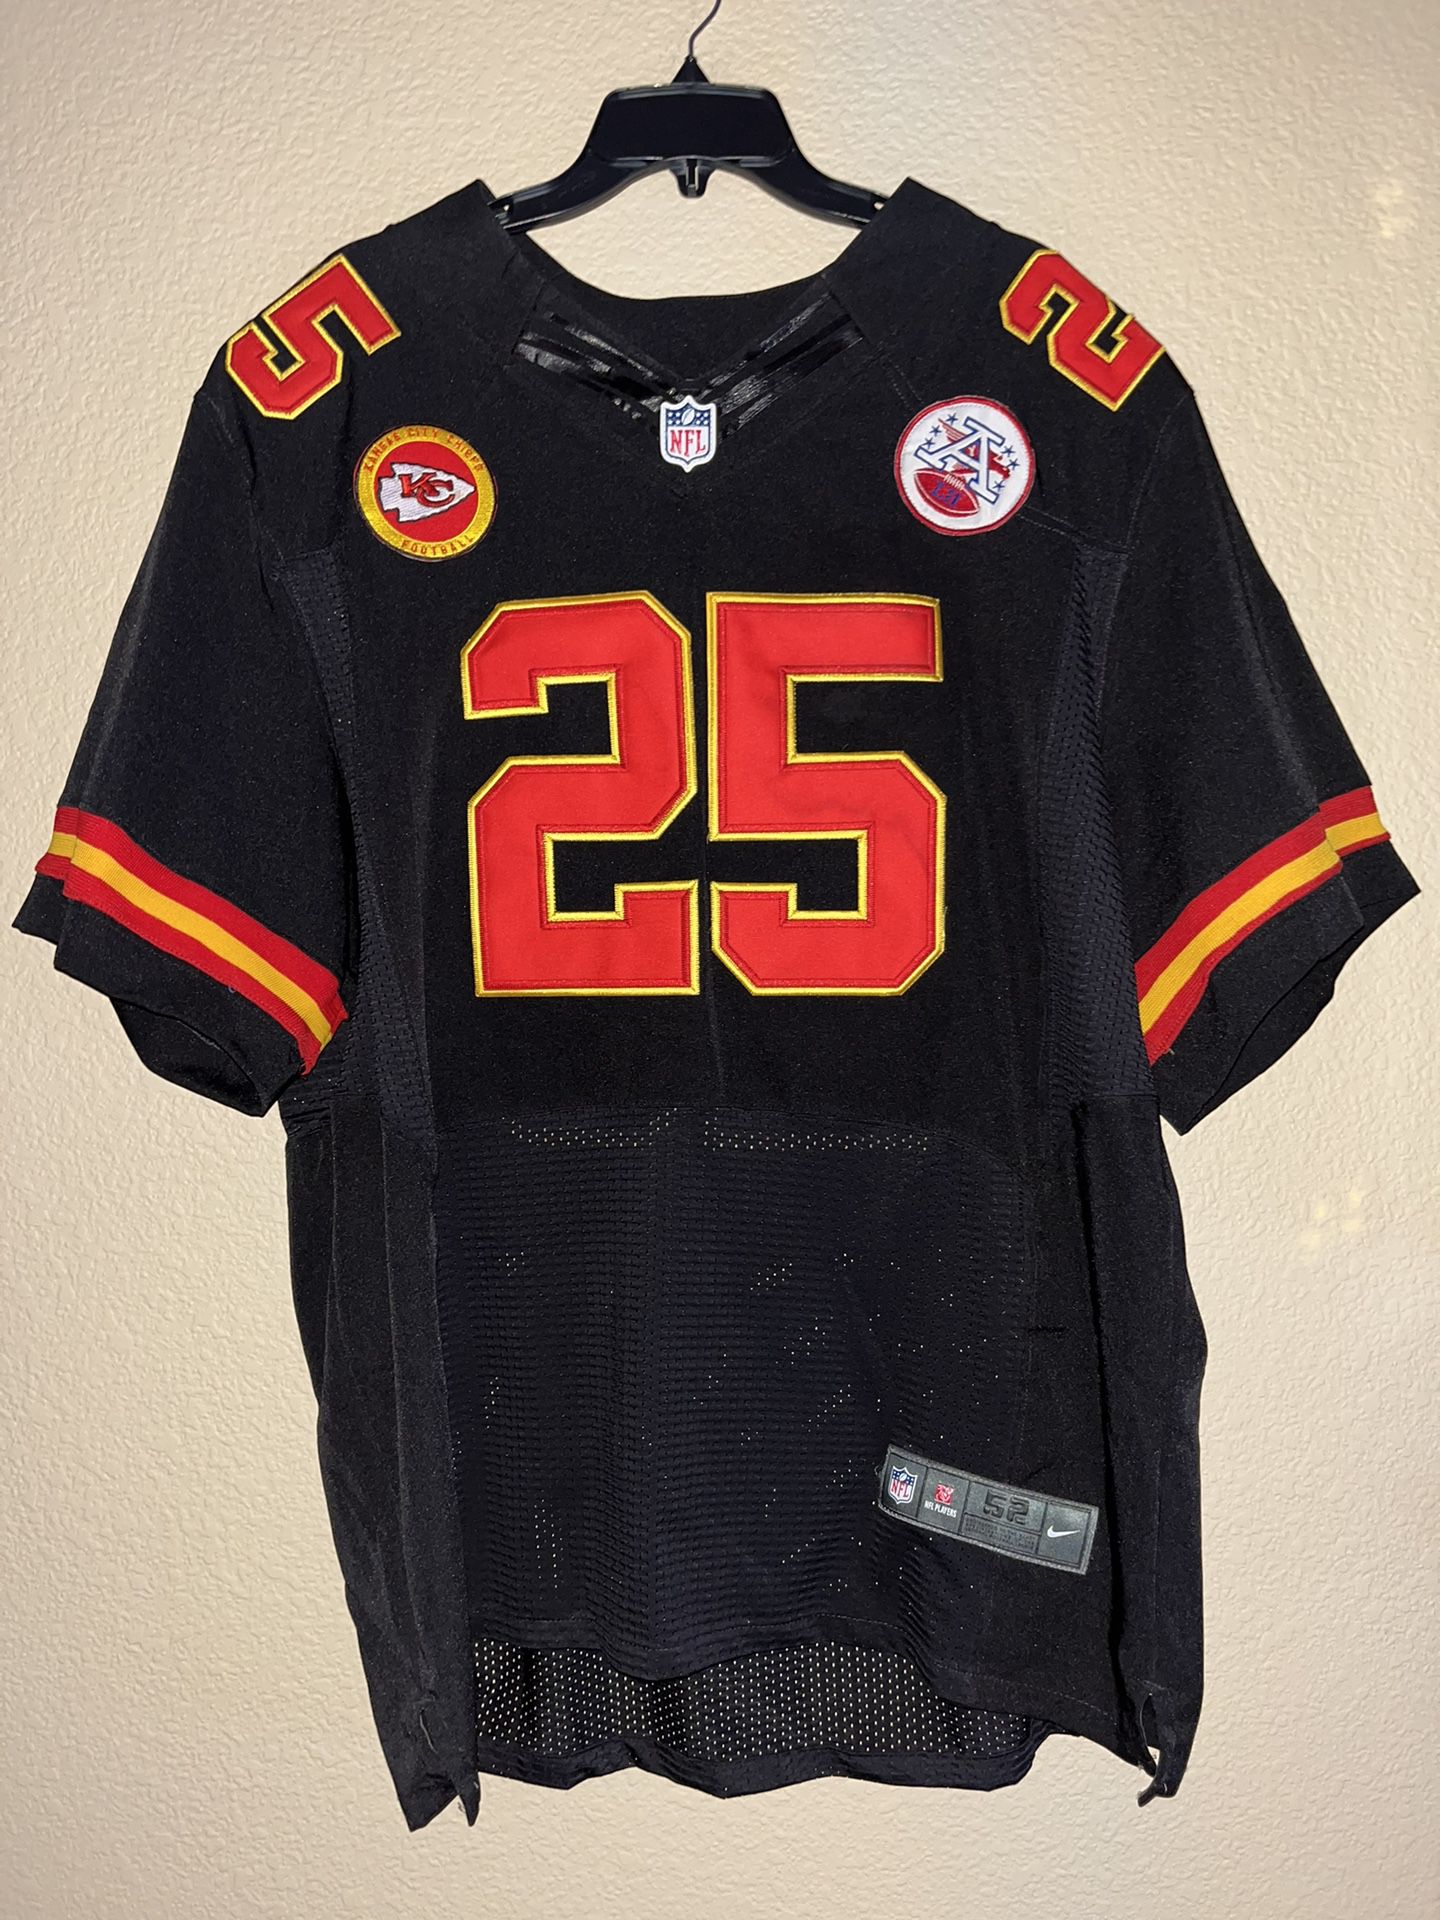 Kansas City Chiefs Alternate jersey Sz 52 for Sale in Peoria, AZ - OfferUp